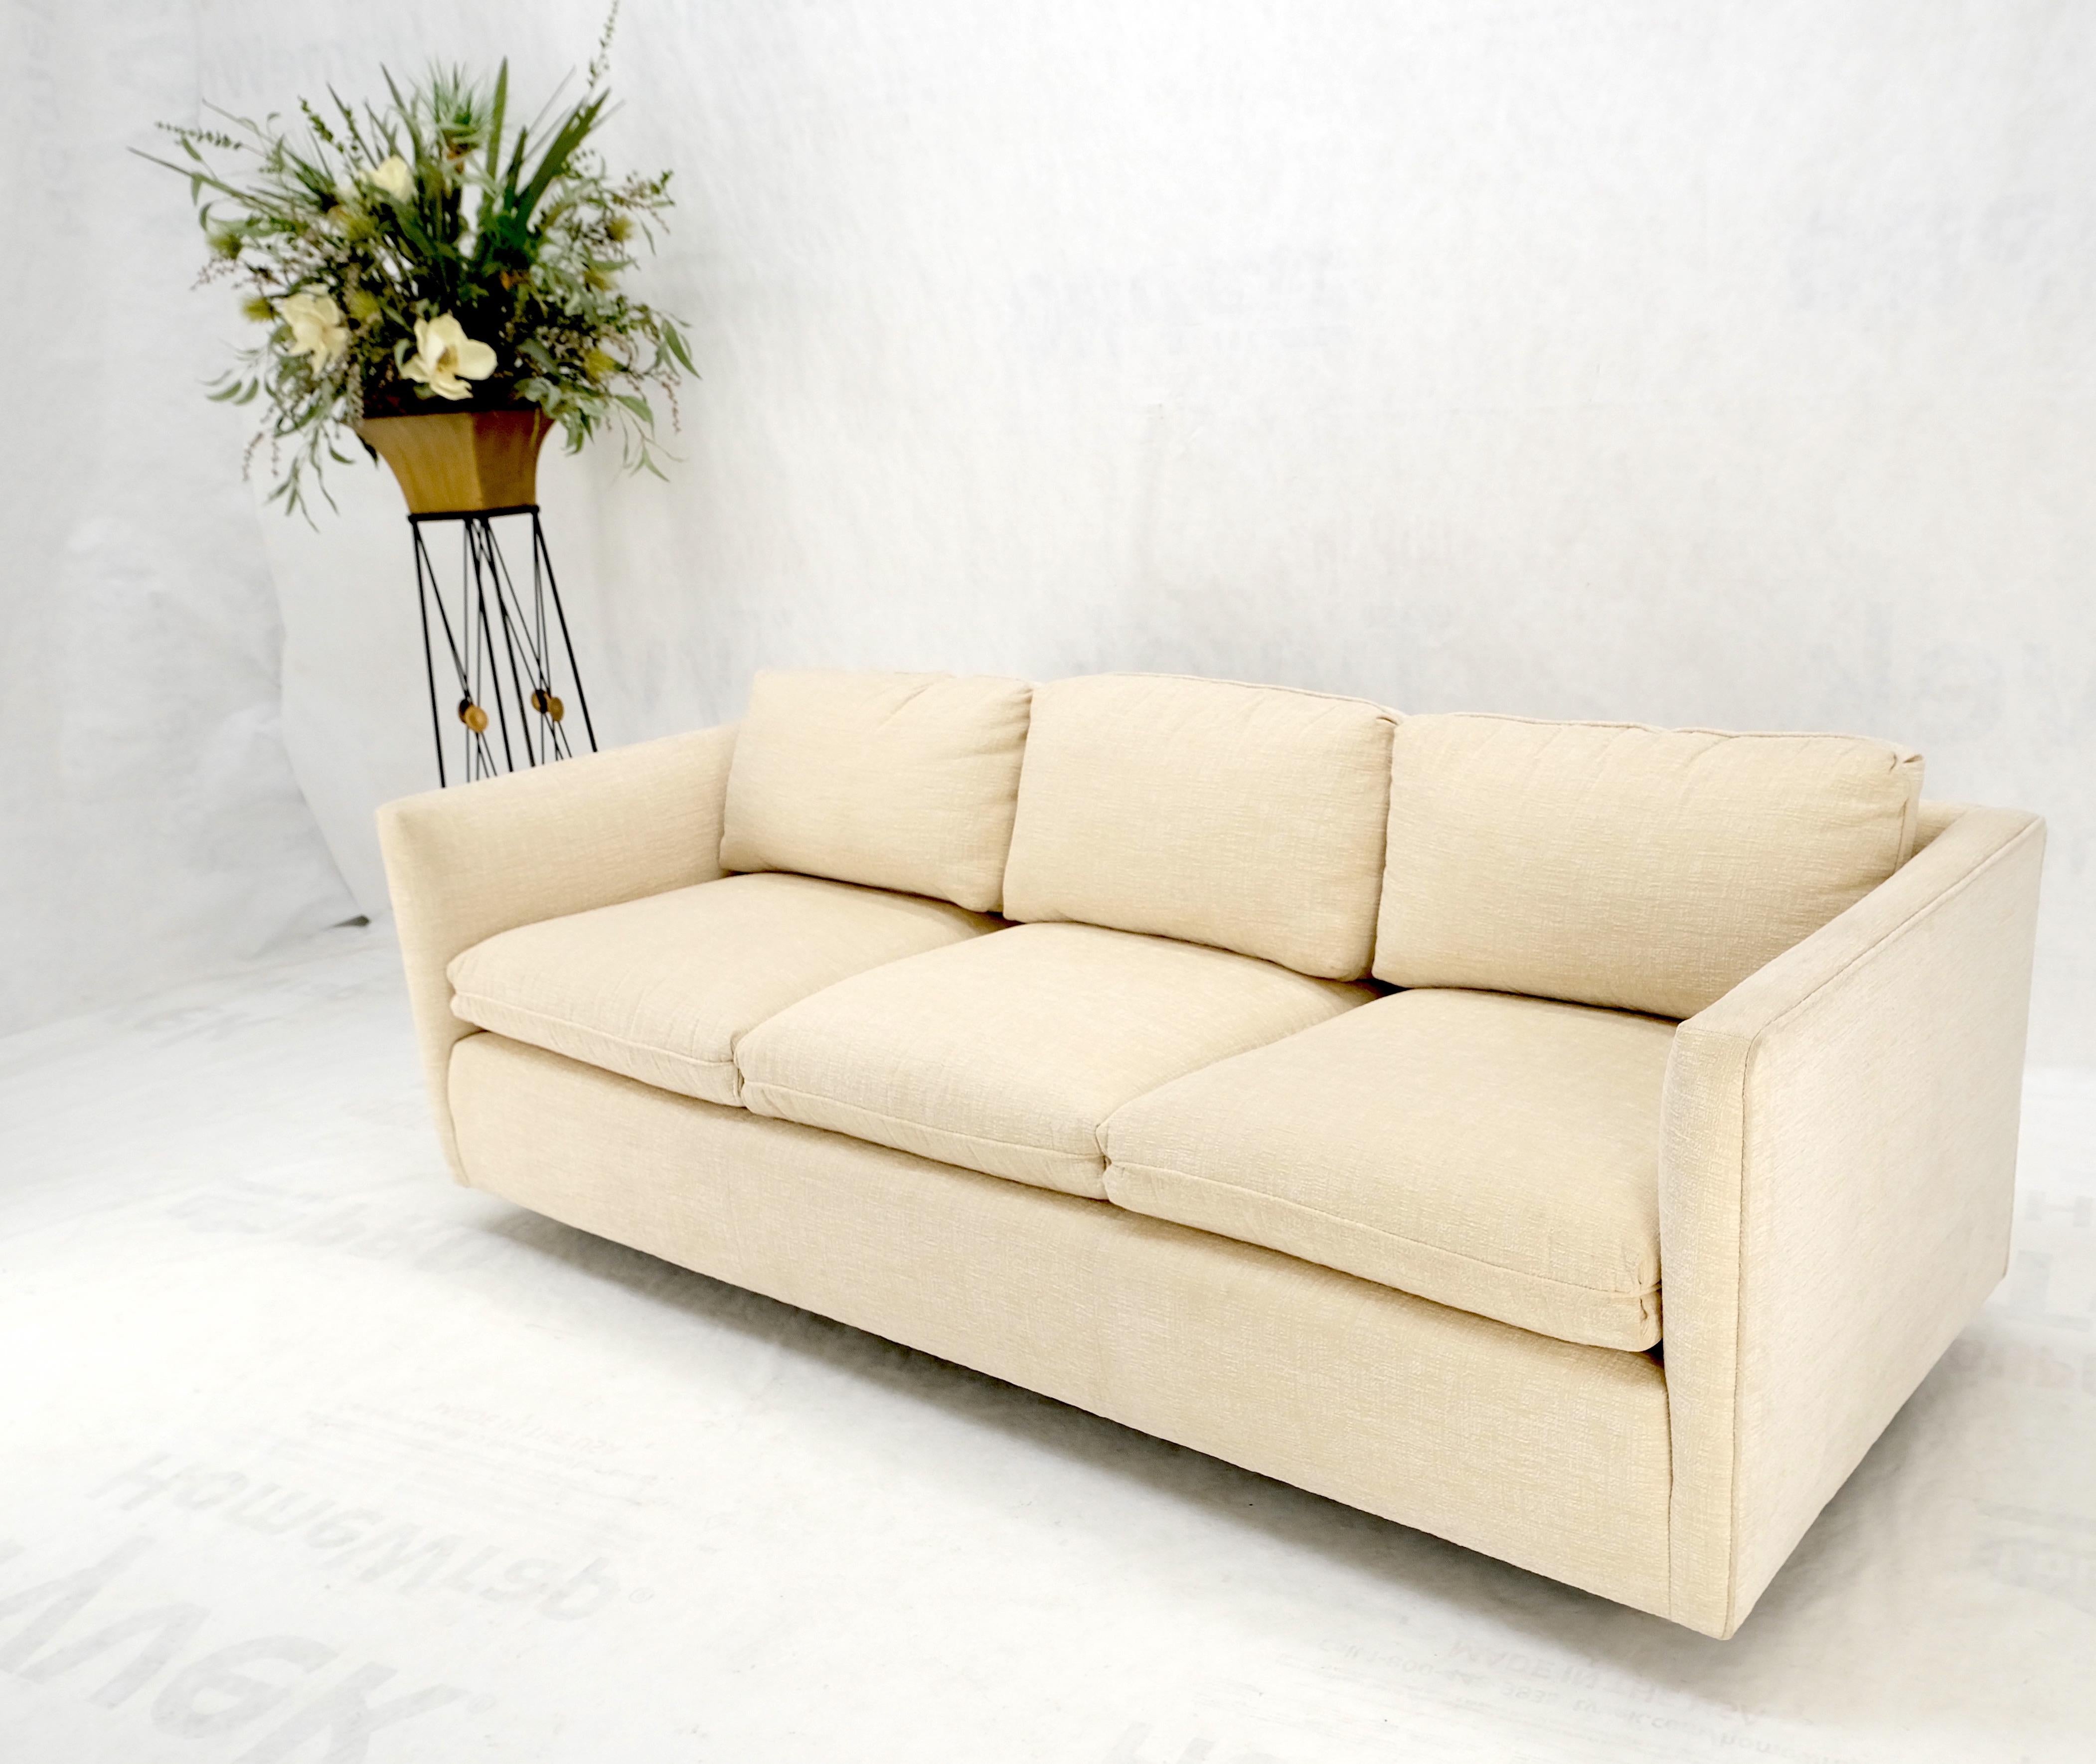 Custom Design Mid-Century Modern beige upholstery box shape sofa mint!